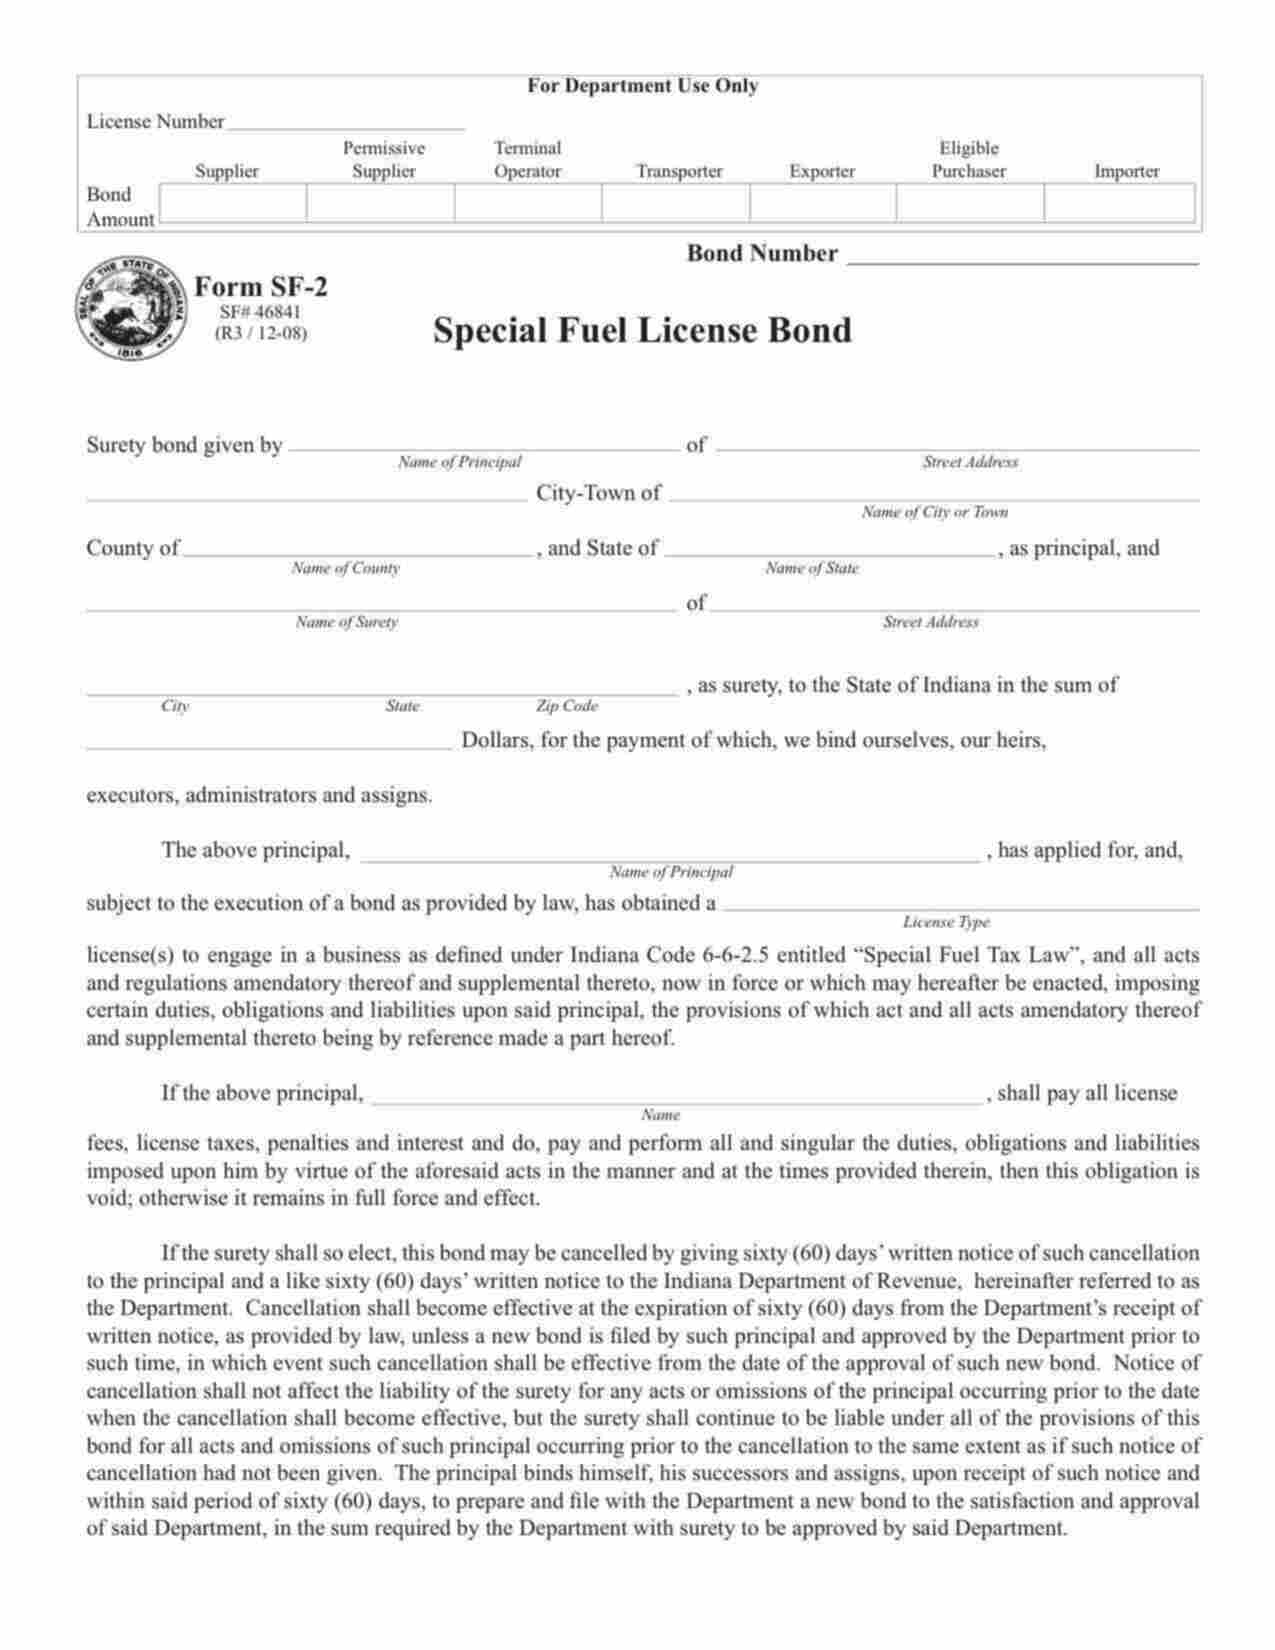 Indiana Special Fuel License - Transporter Bond Form